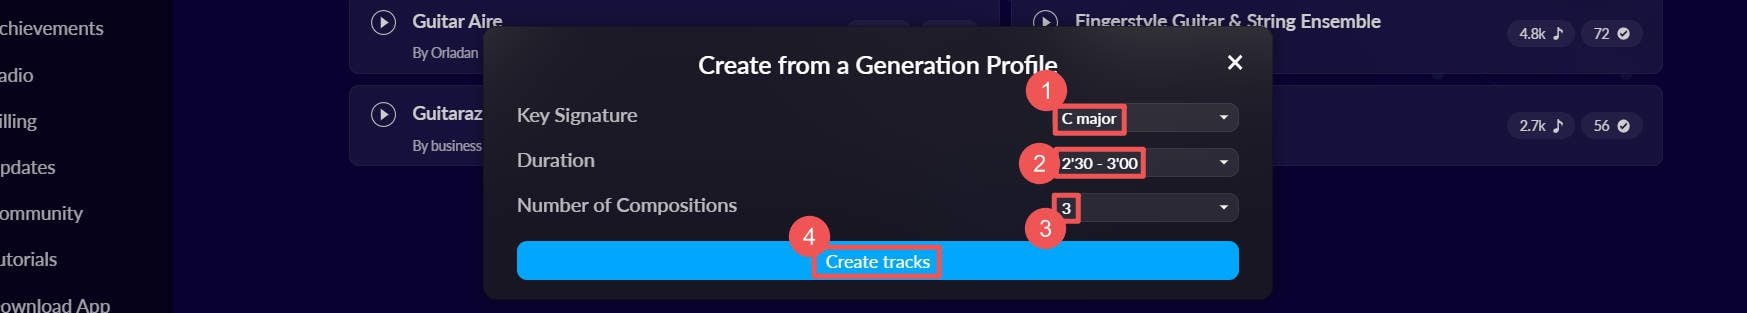 AIVA Create AI Music - Steps 3-6